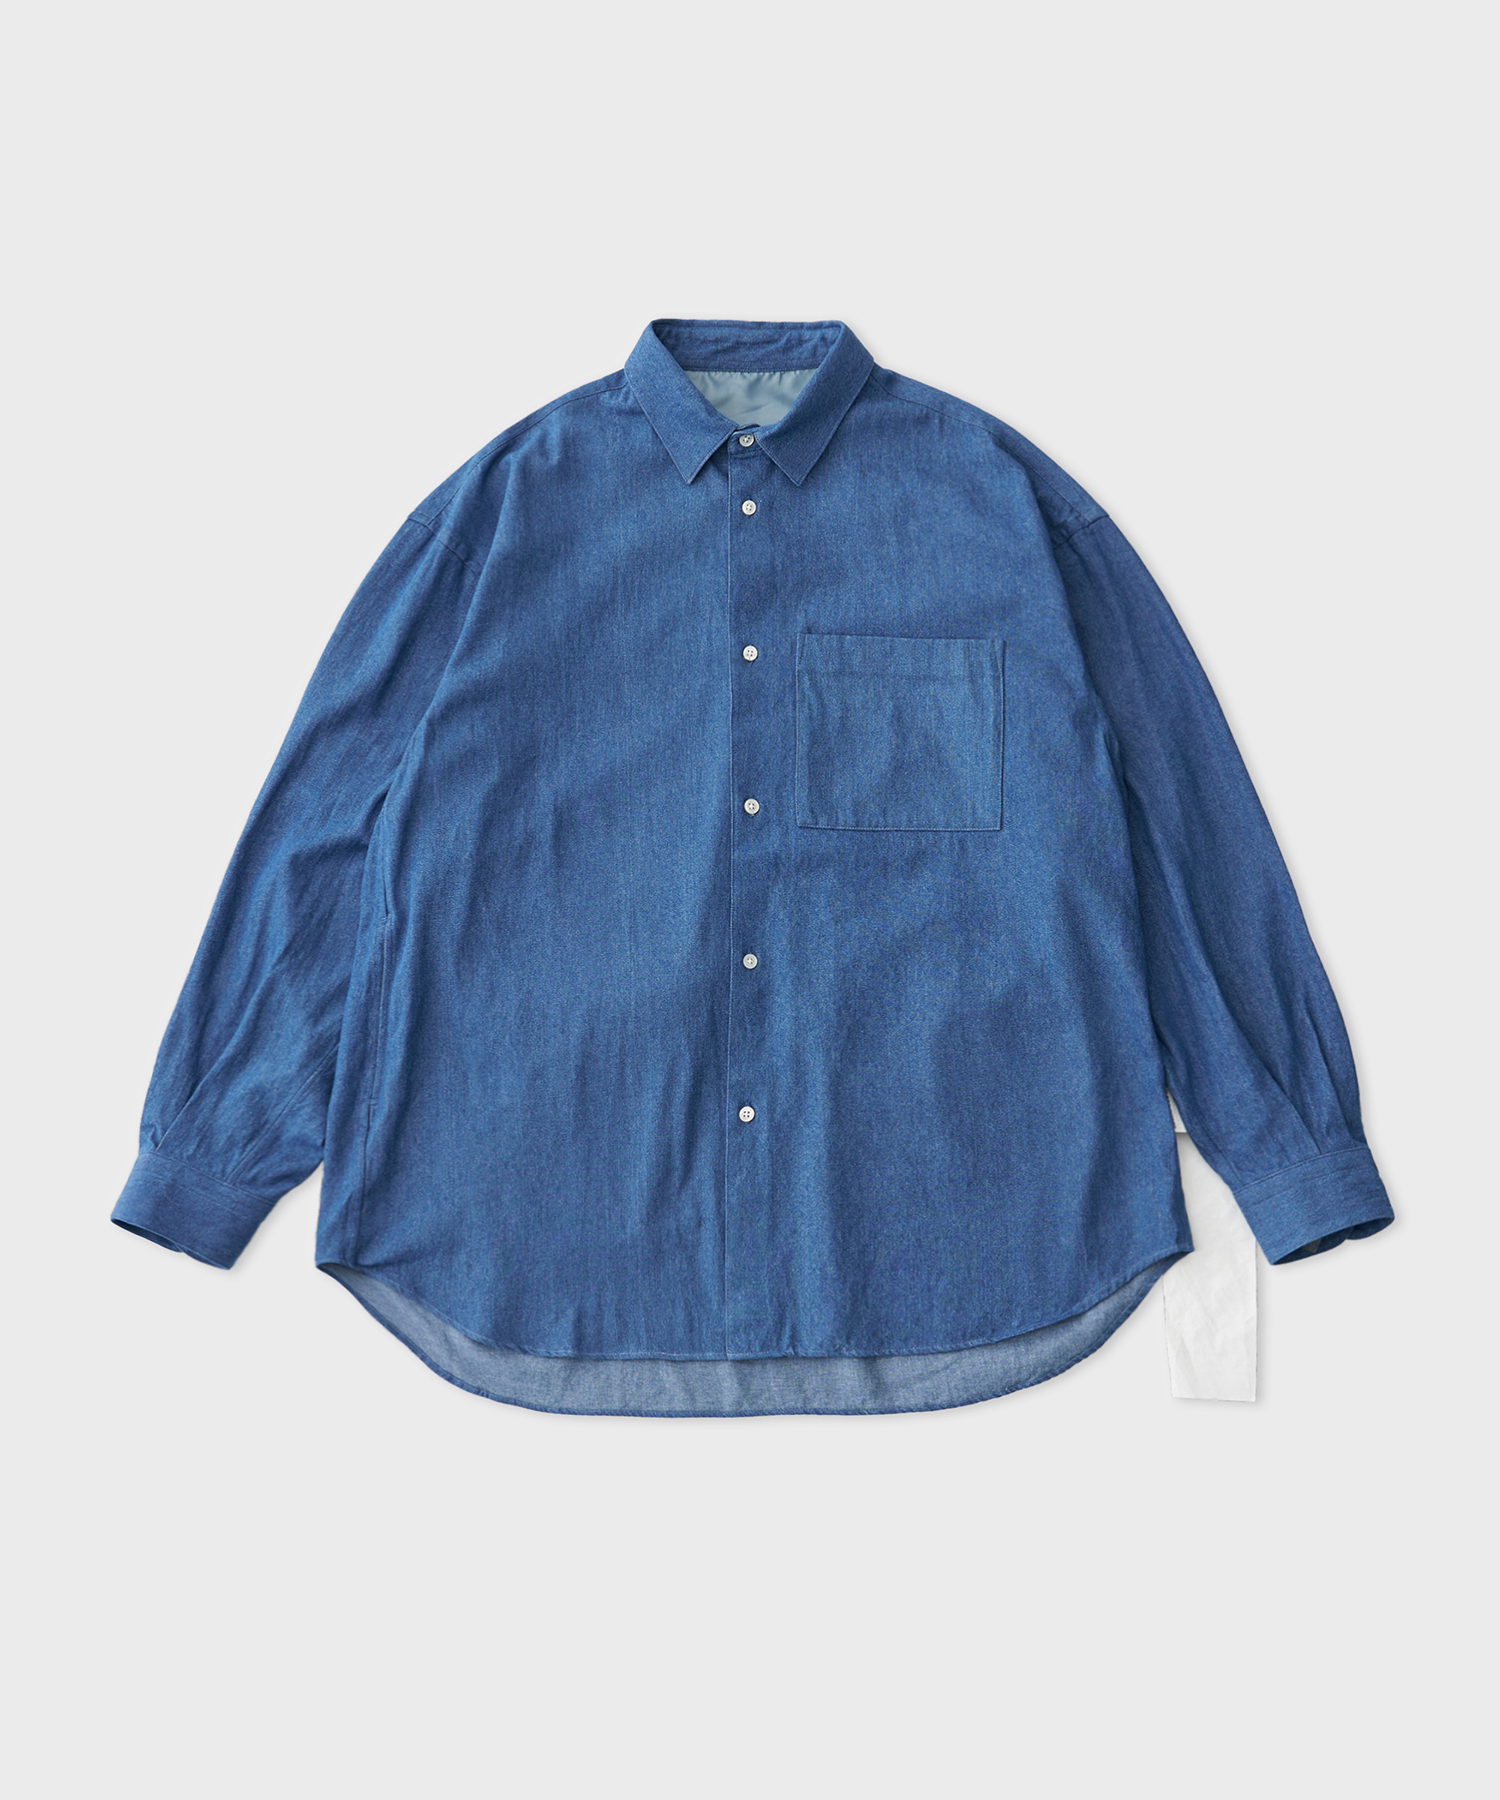 Jim Regular Collar Shirt (Indigo Blue)